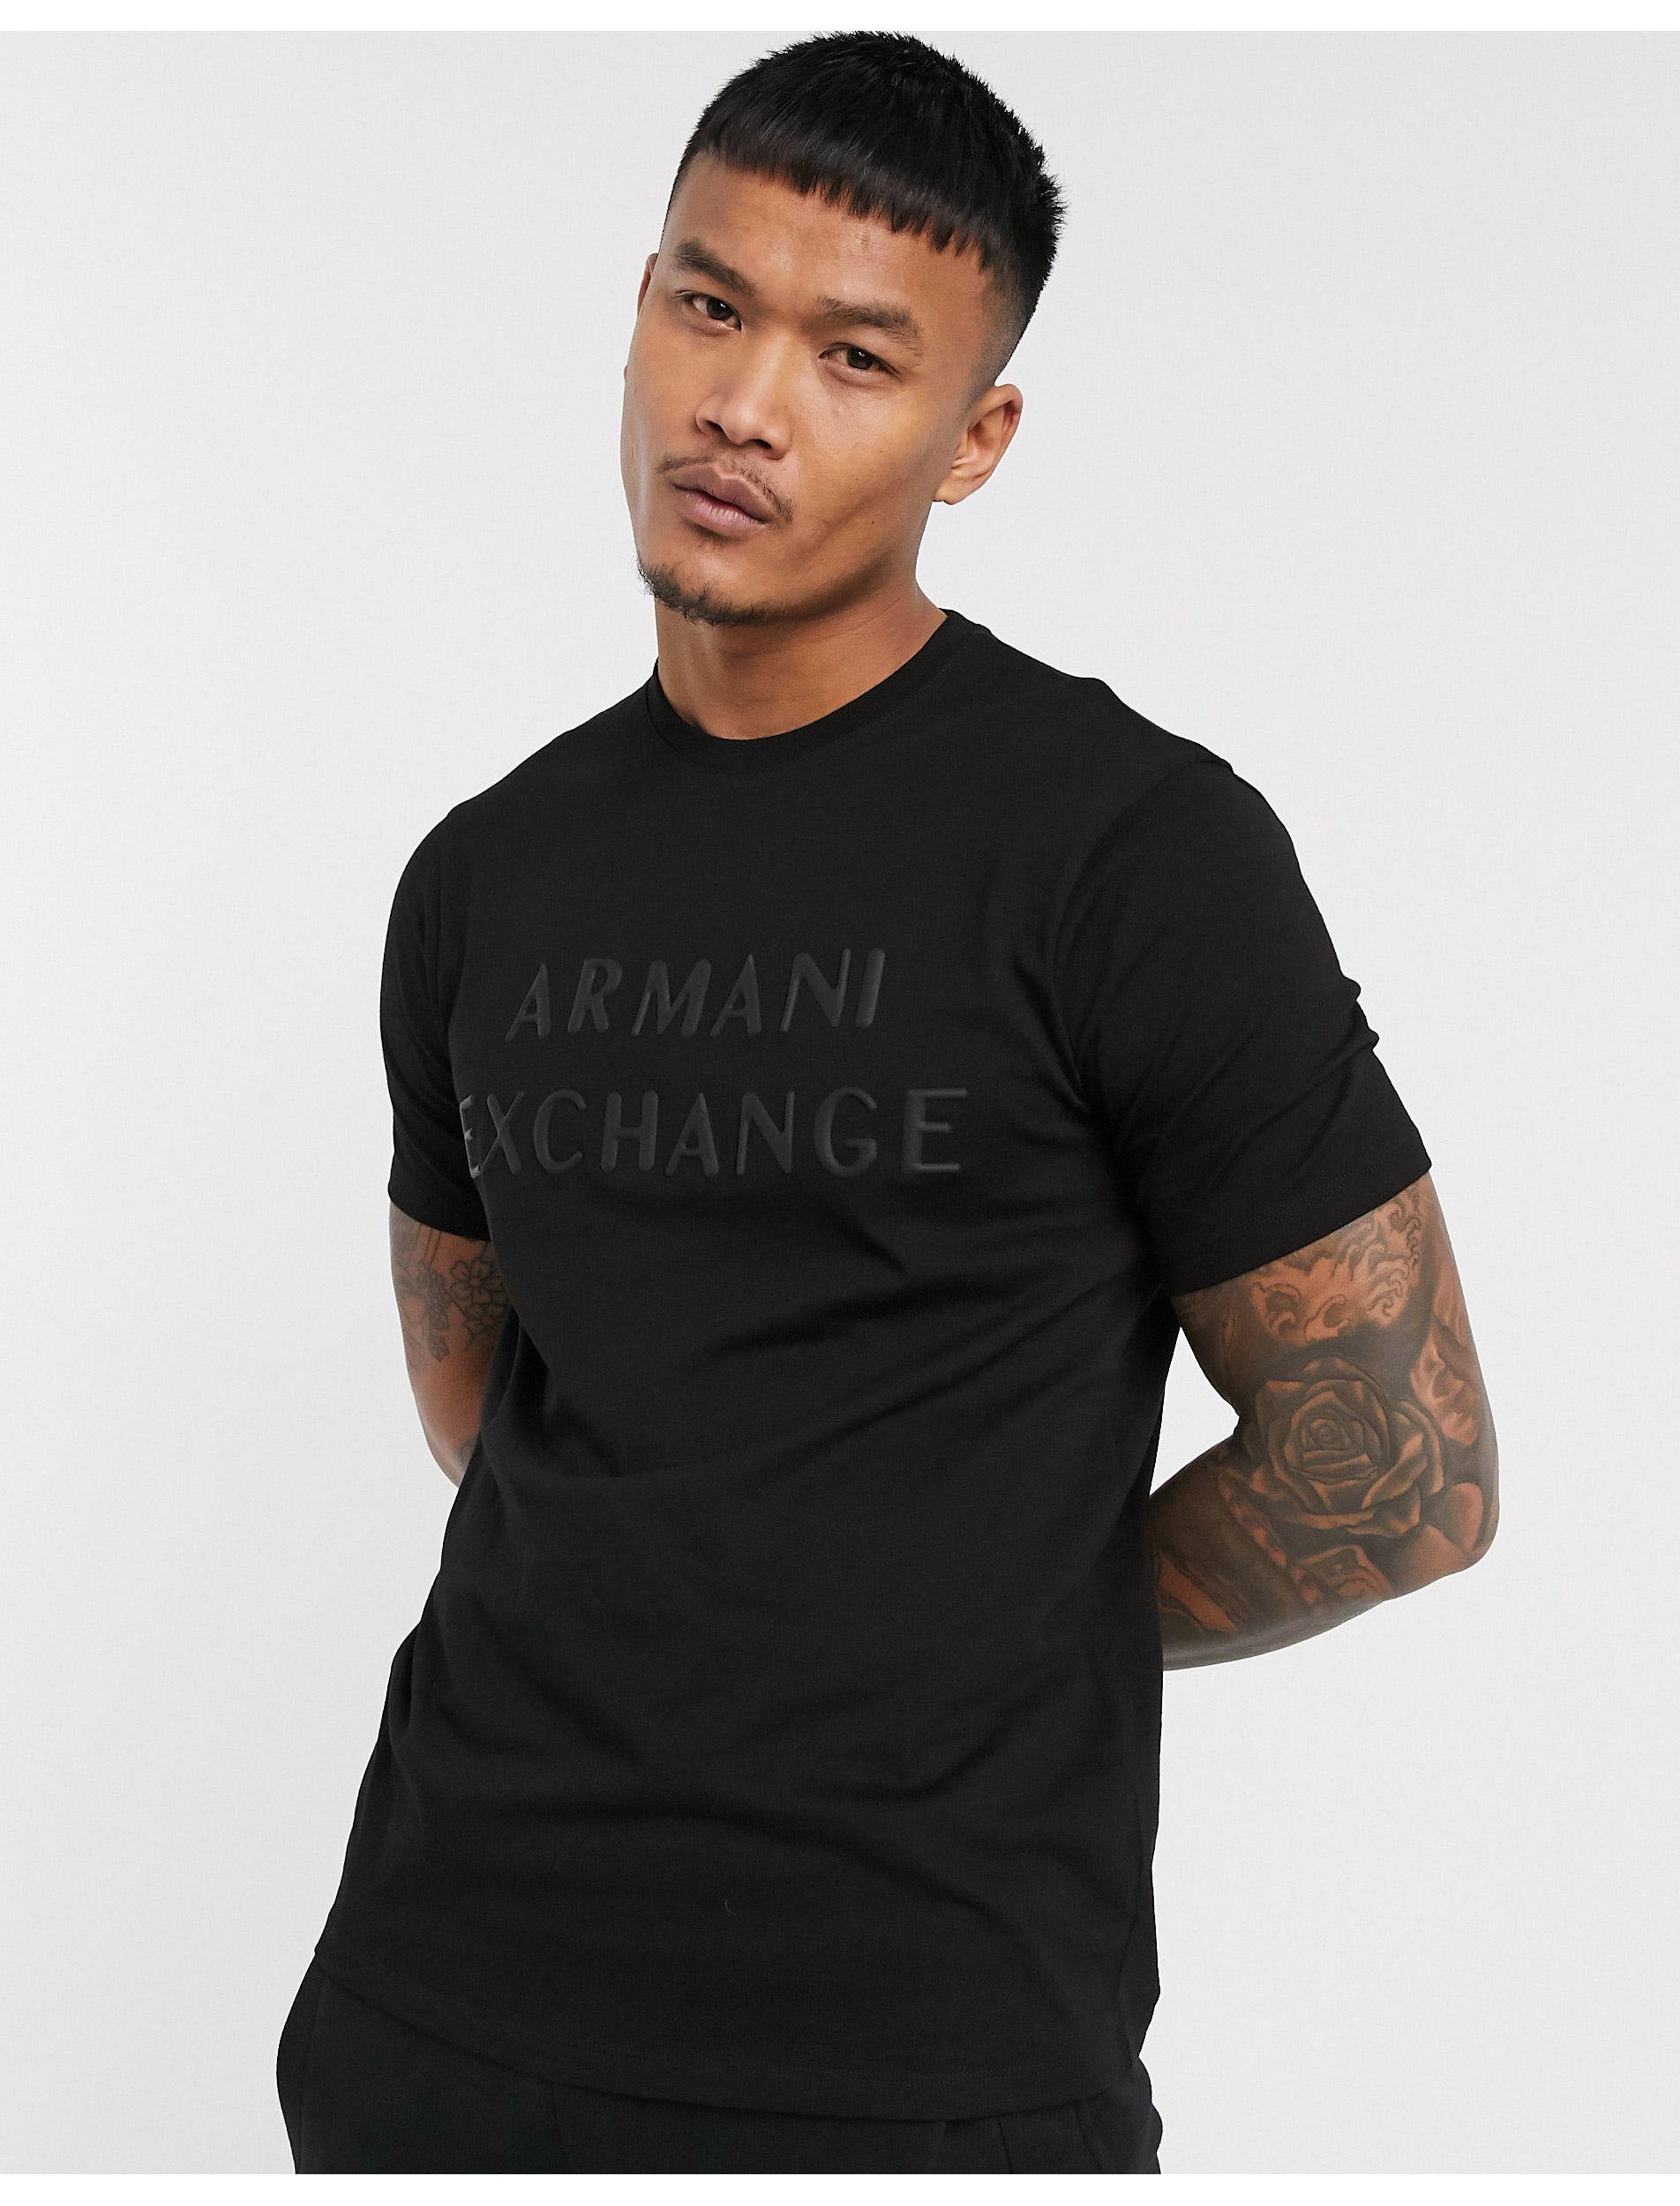 Armani Exchange Men T-Shirt - Black / S